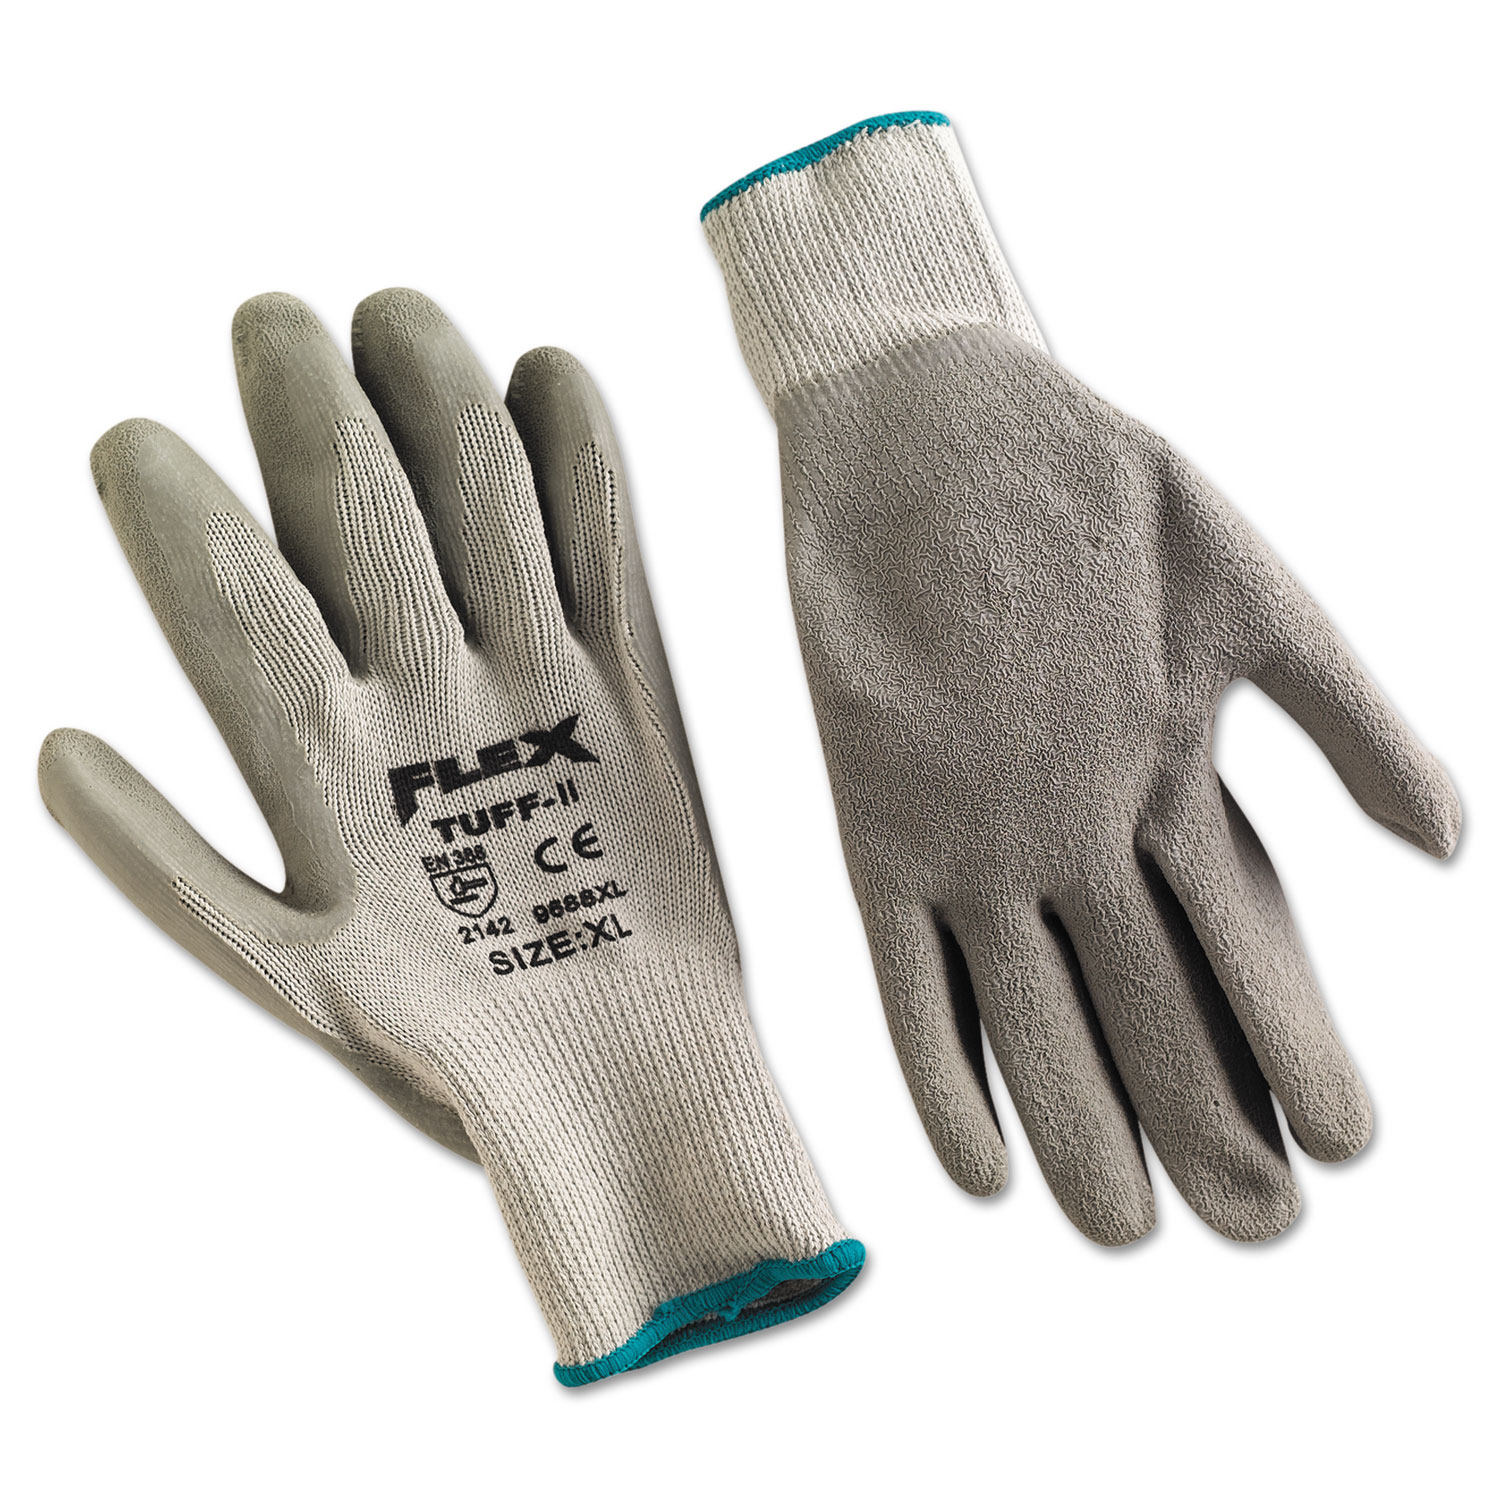  MCR Safety 9688XL FlexTuff Latex Dipped Gloves, Gray, X-Large, 12 Pairs (MPG9688XL) 